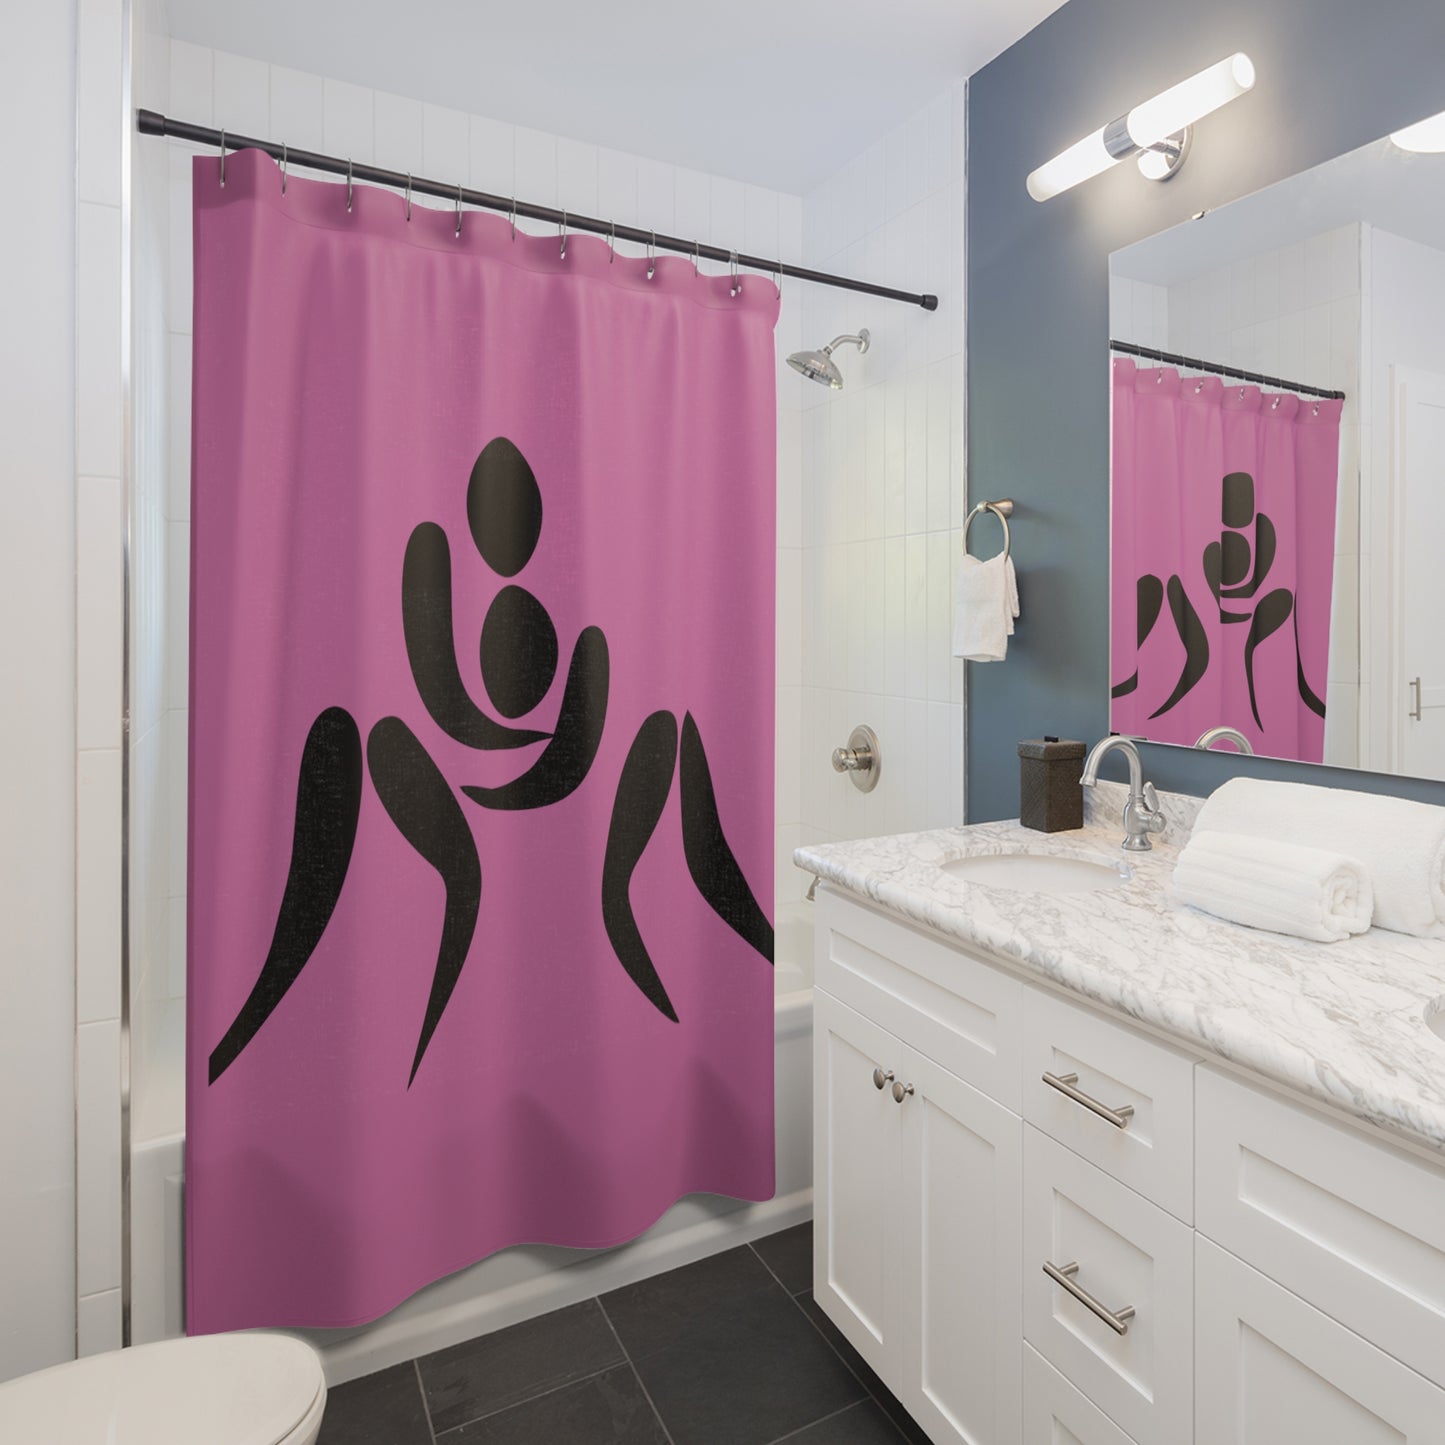 Shower Curtains: #1 Wrestling Lite Pink